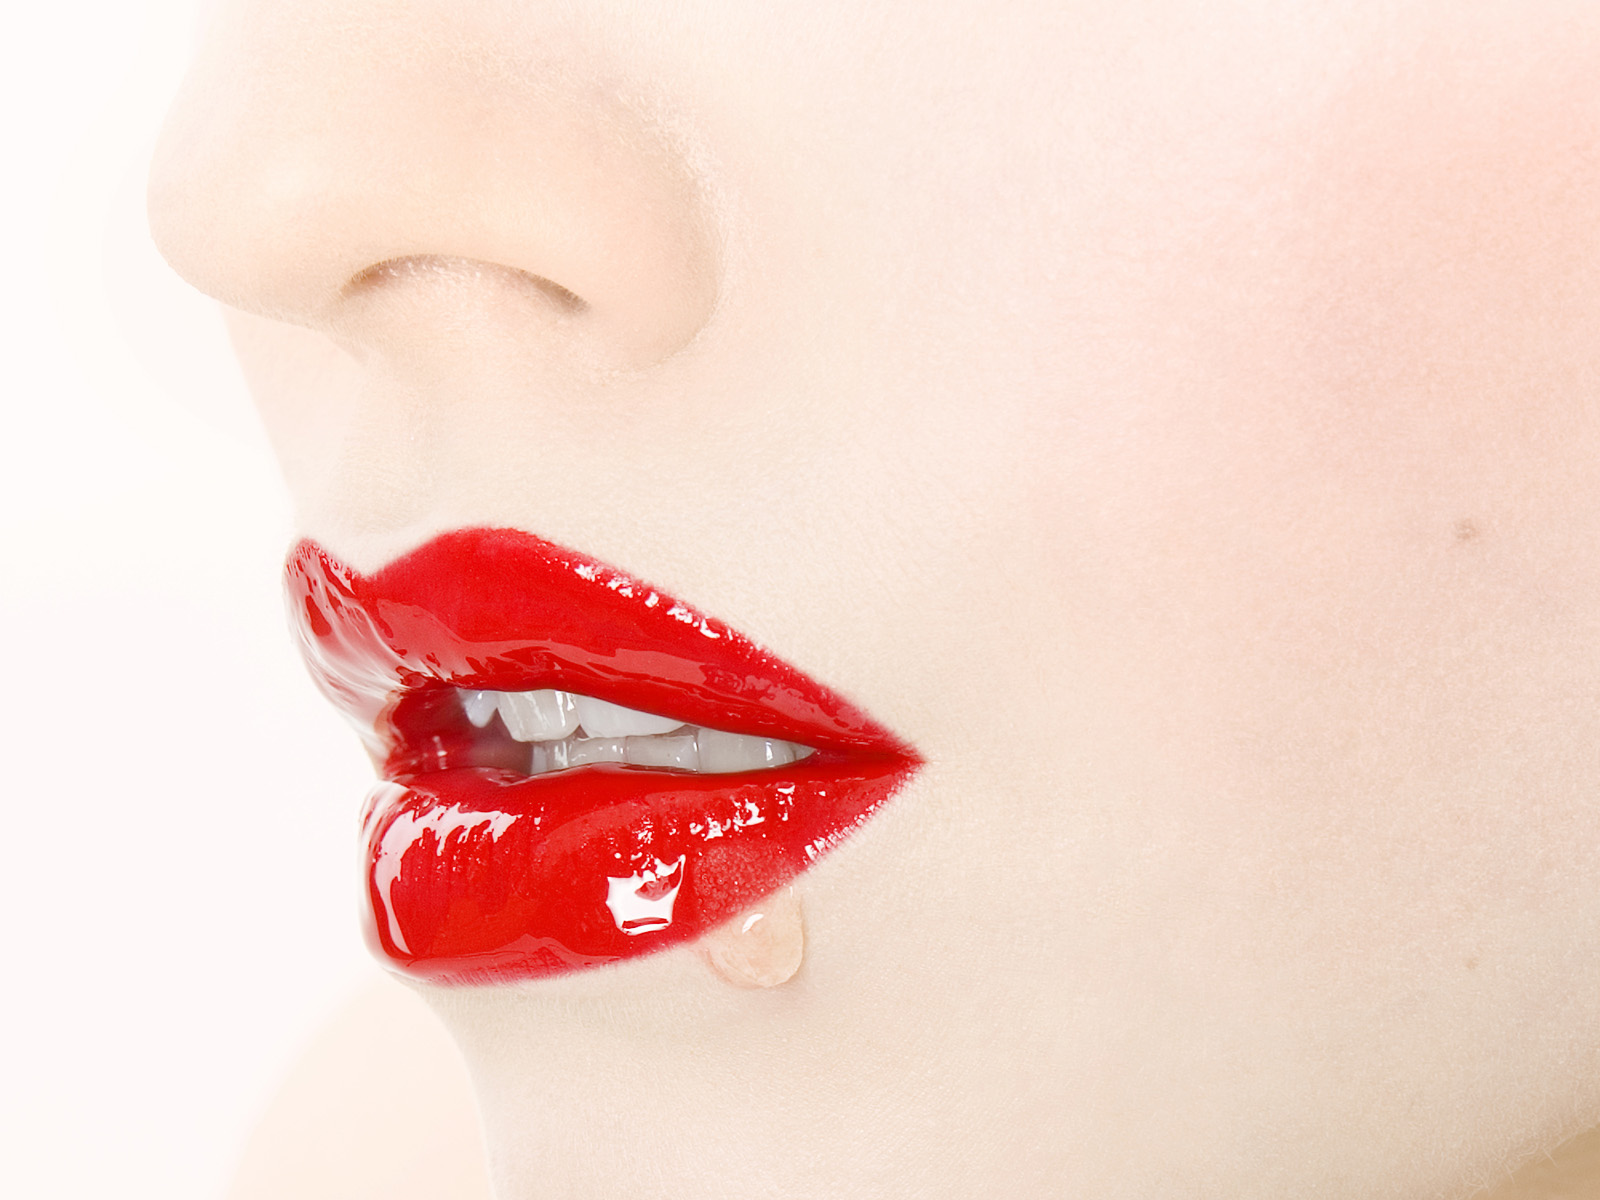 Women Lips HD Wallpaper Background Image.